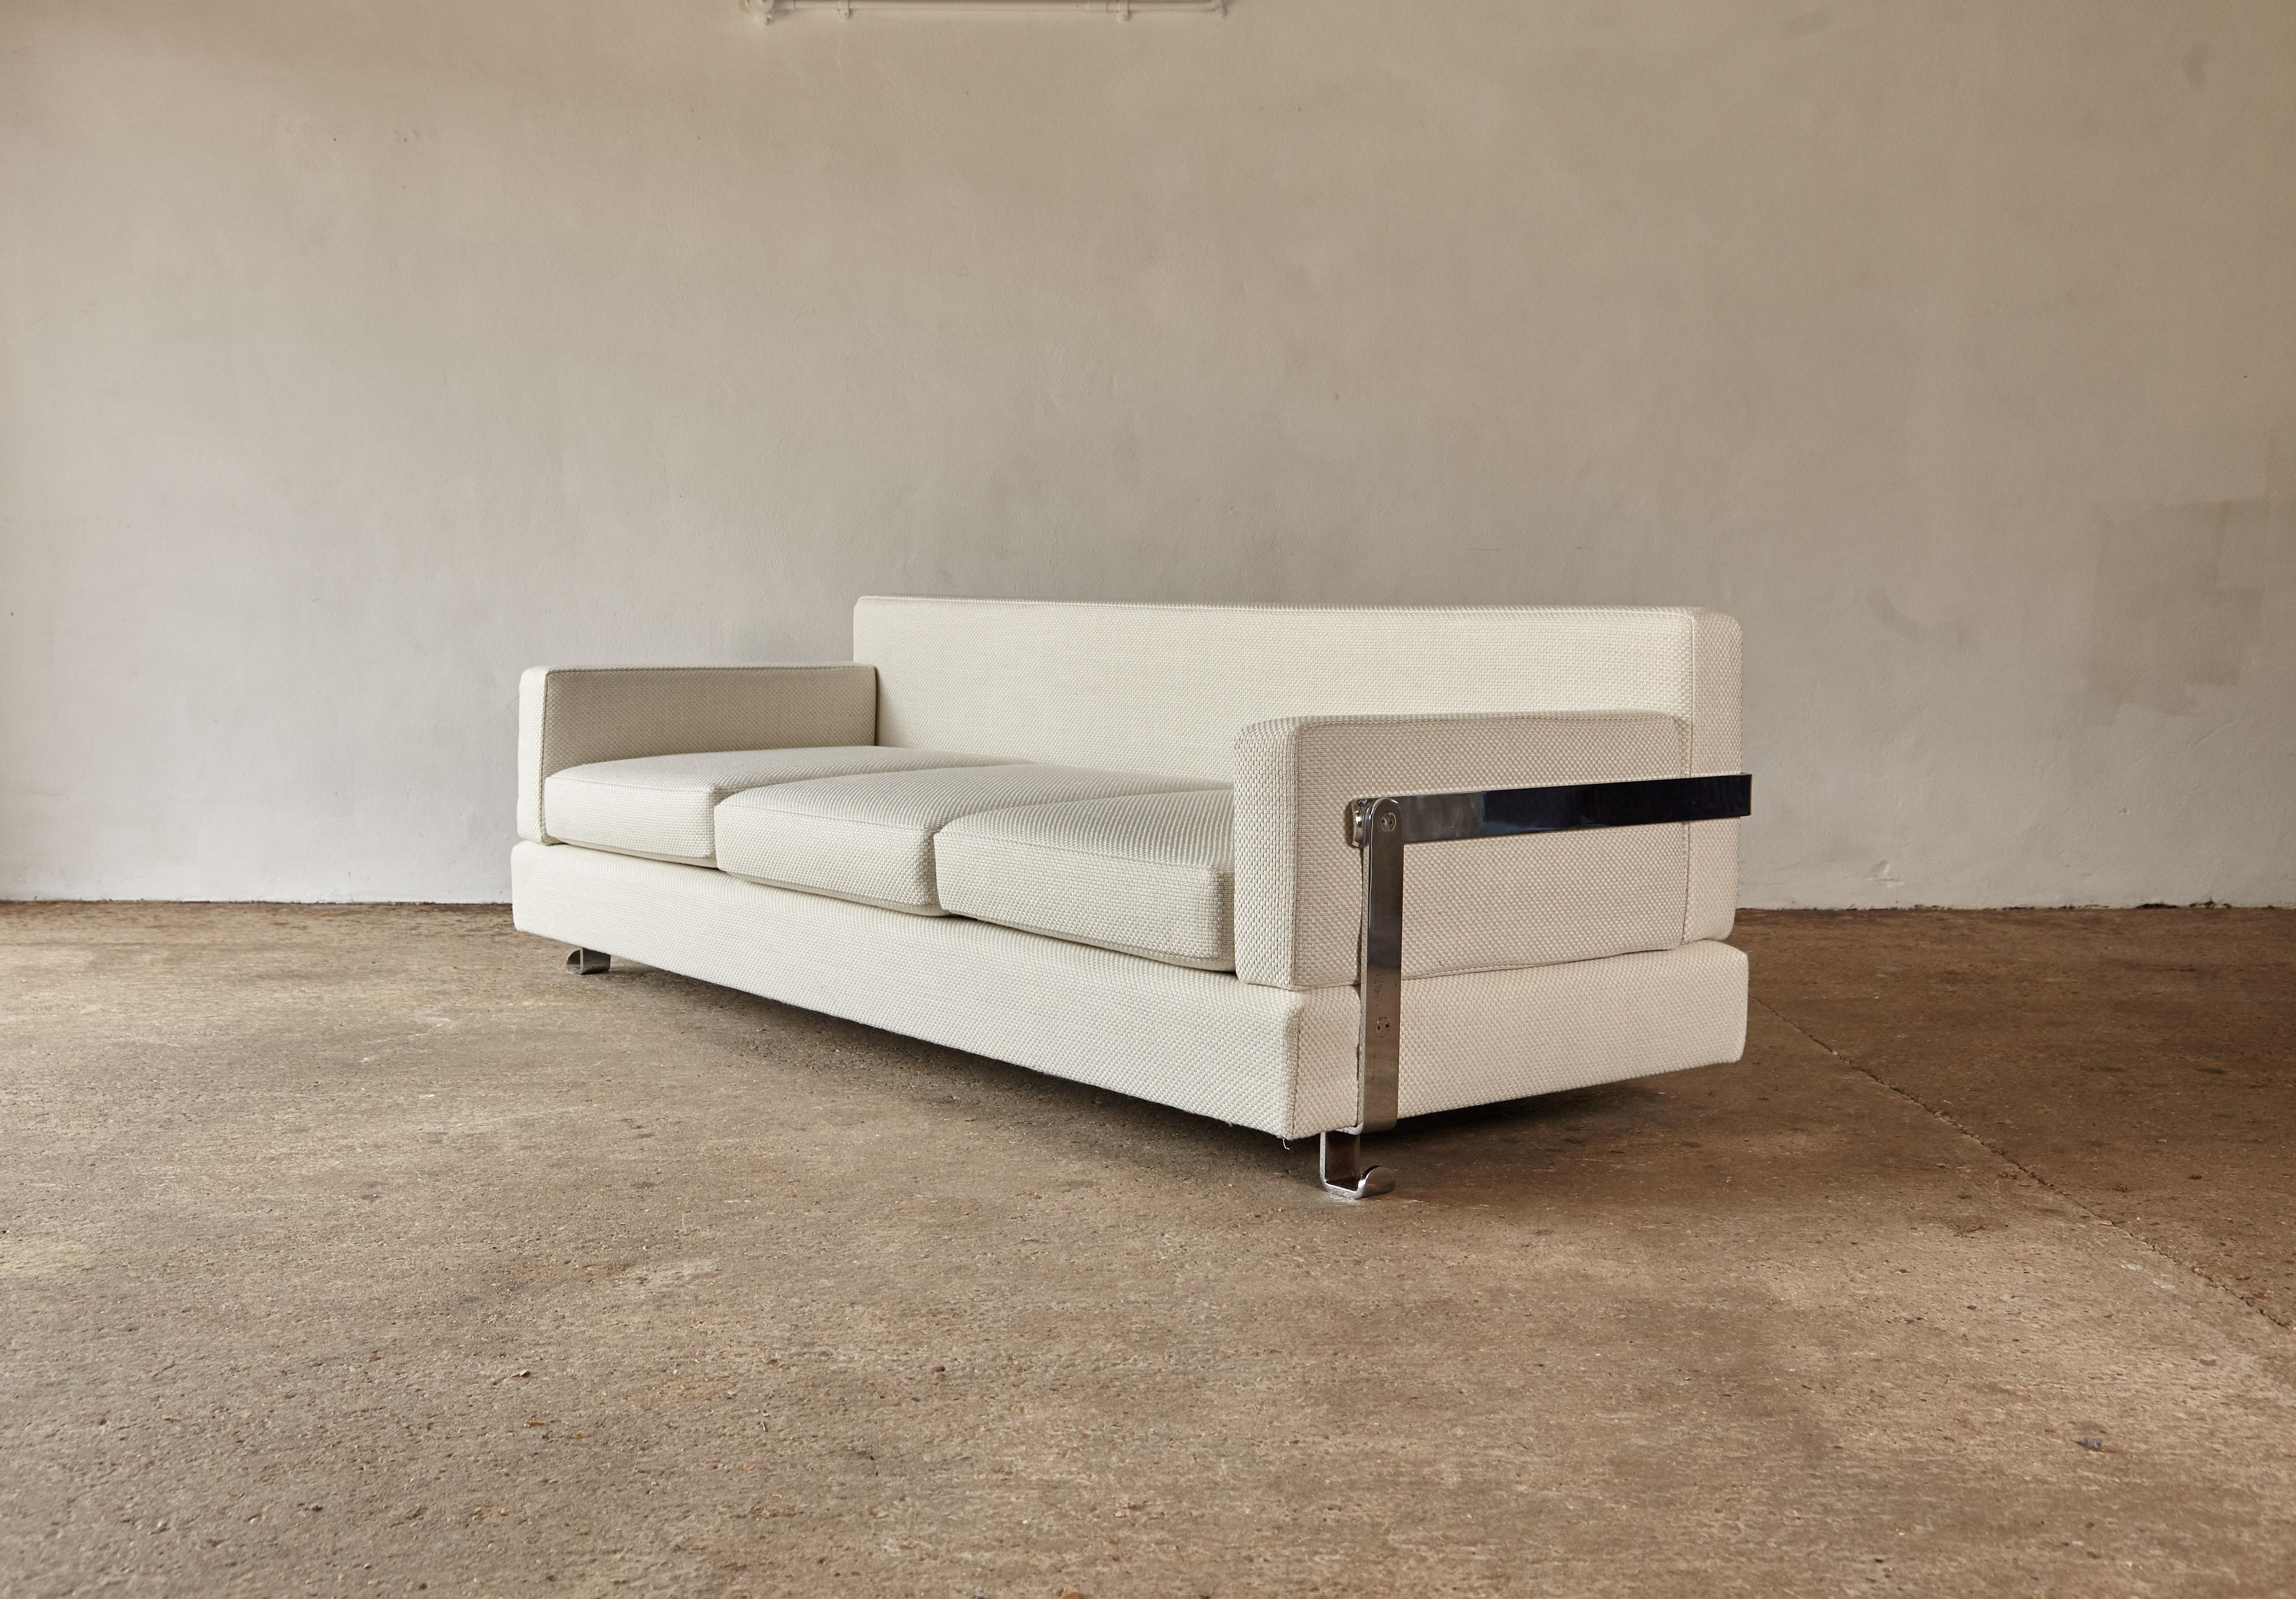 Luigi Caccia Dominioni Fasce Cromate Sofa, Modell P11, Azucena, Italien, 1960er Jahre (20. Jahrhundert) im Angebot